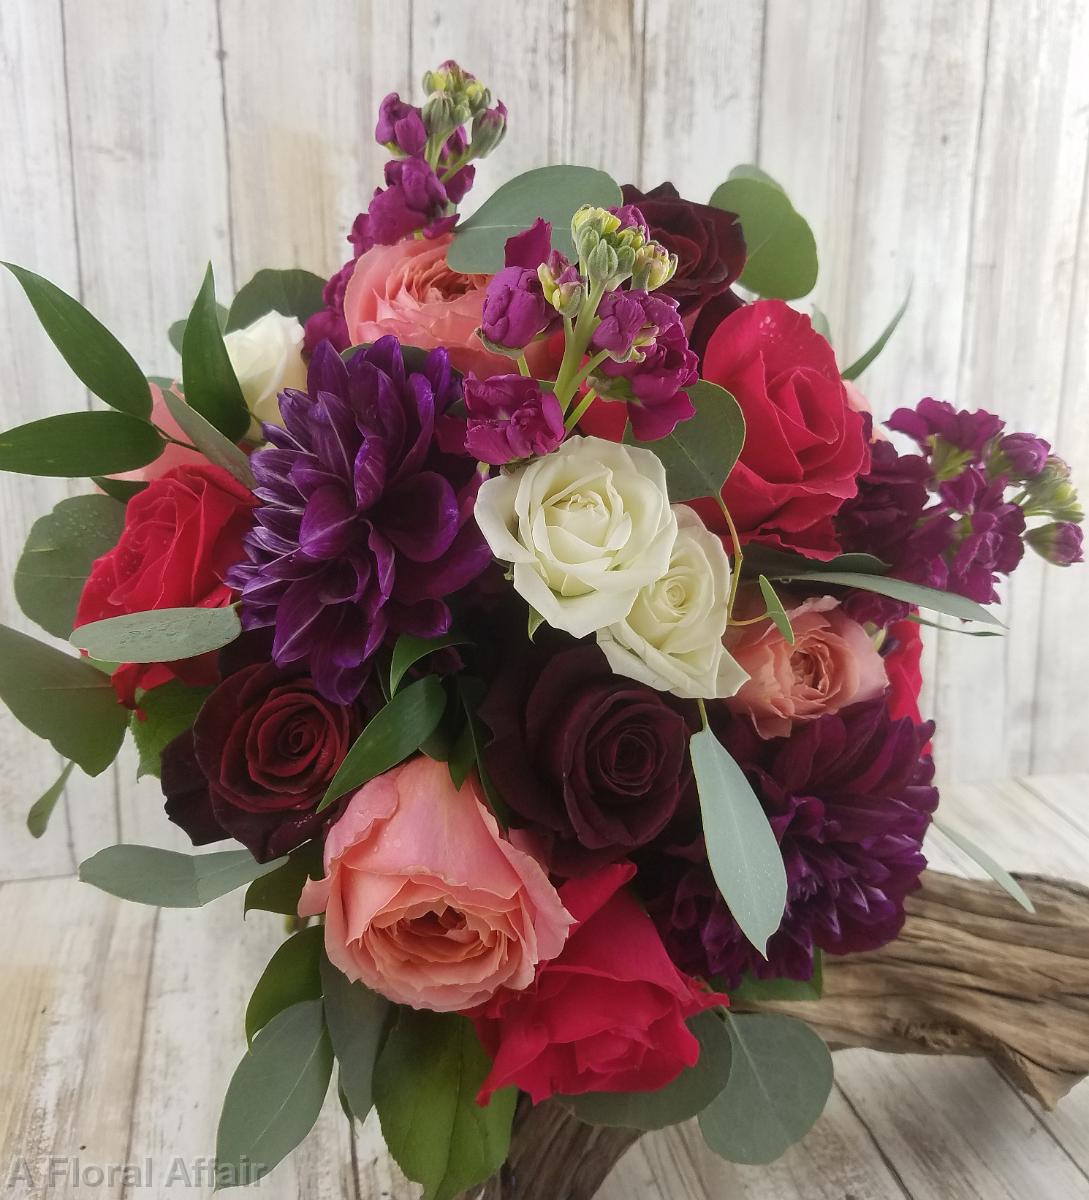 BB1436-Wine, Plum and Coral Brides Bouquet